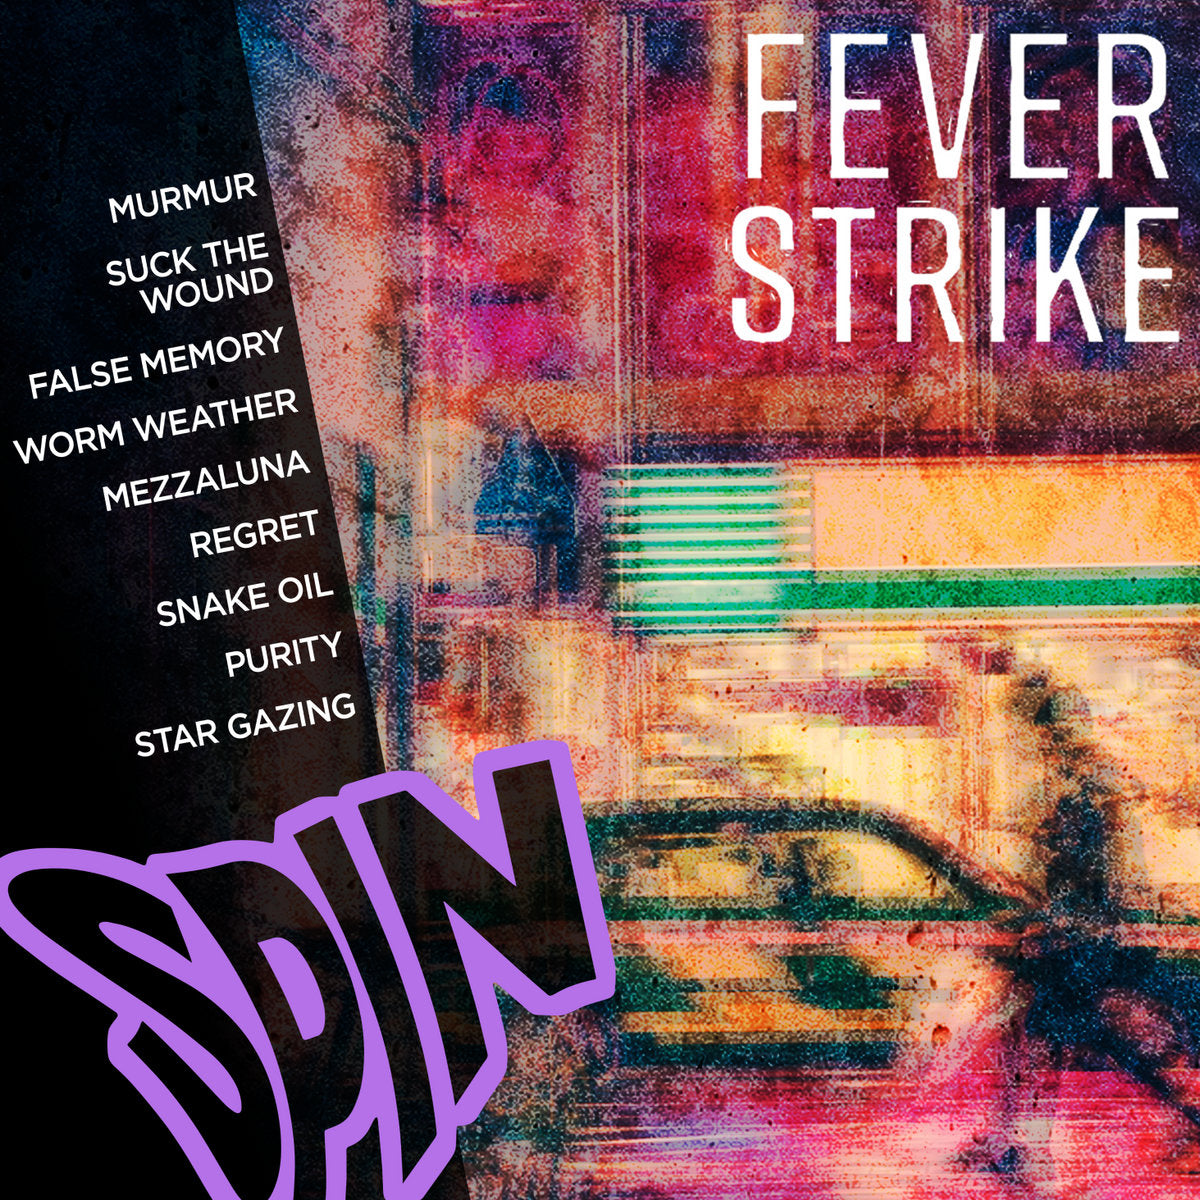 FEVER STRIKE 'Spin' LP / TRANSPARENT GREEN WITH OPAQUE ORANGE SPLATTER EDITION